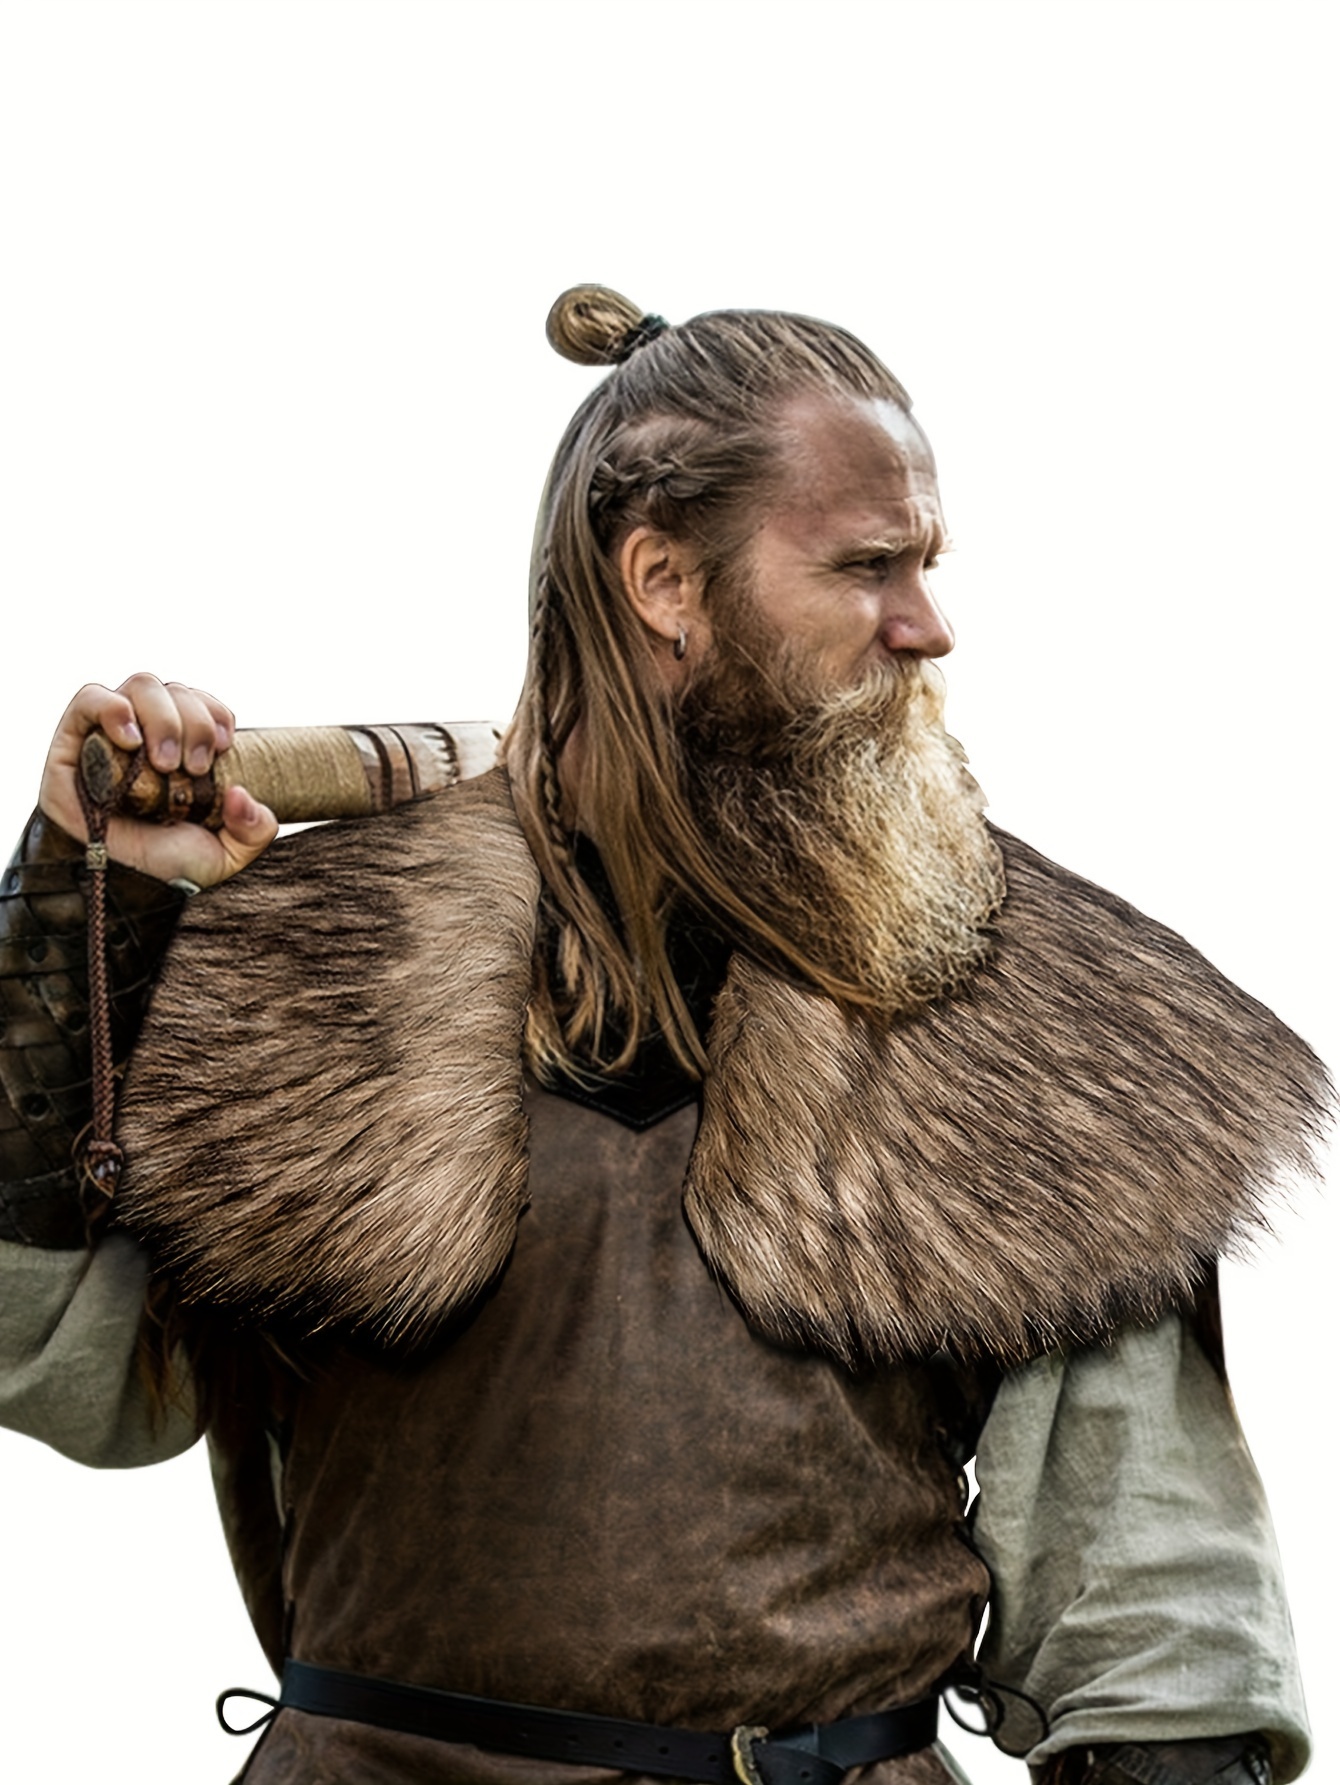 Costume Viking commander en ligne chez